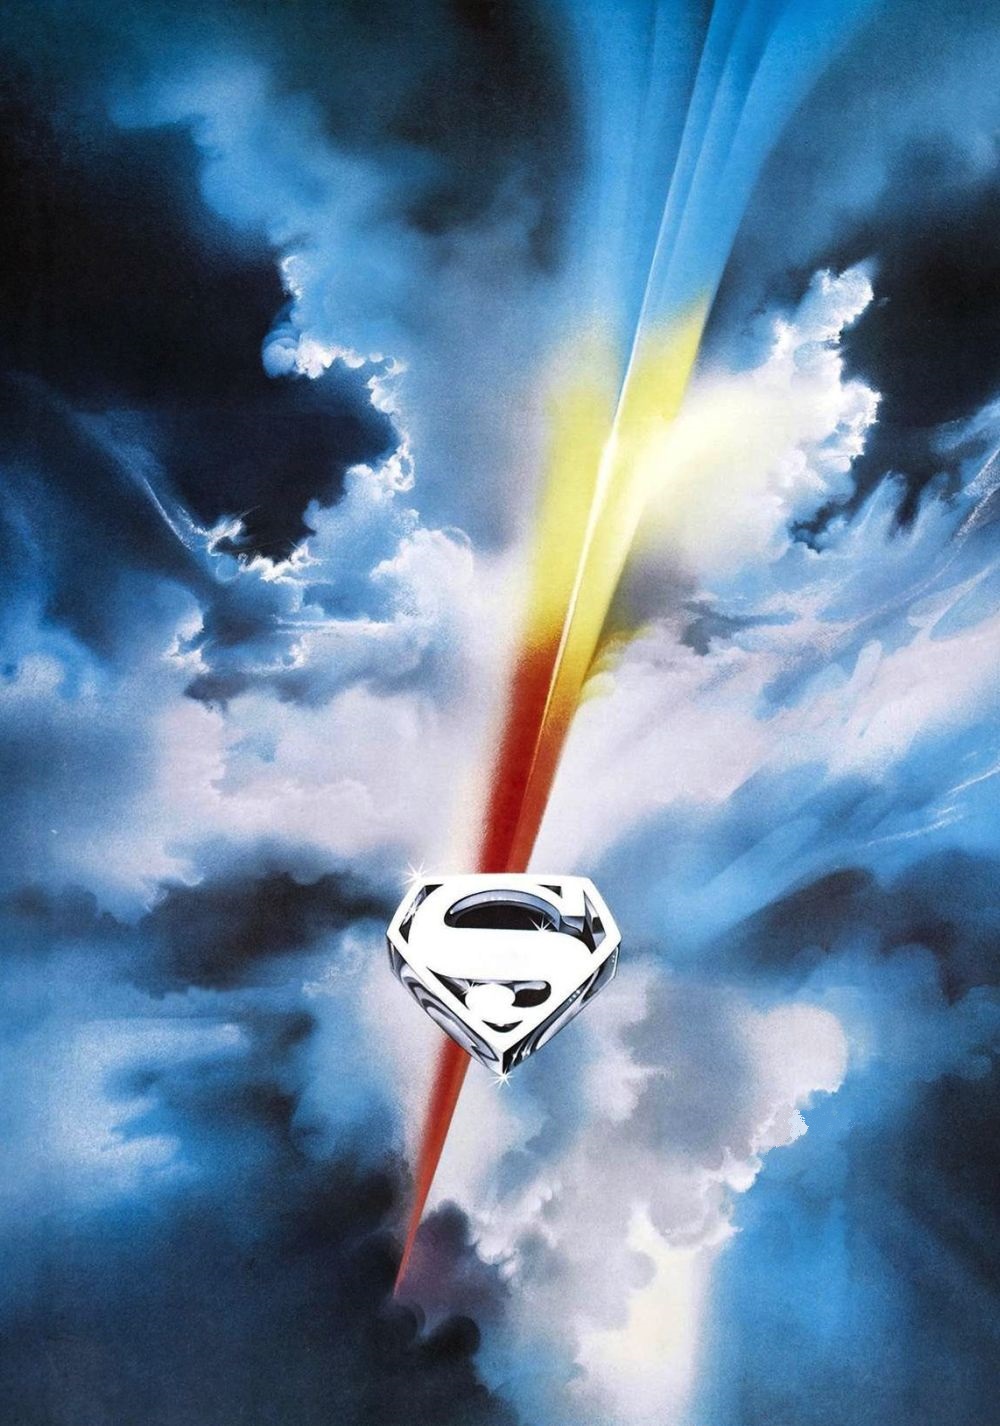 Superman (1978) Art